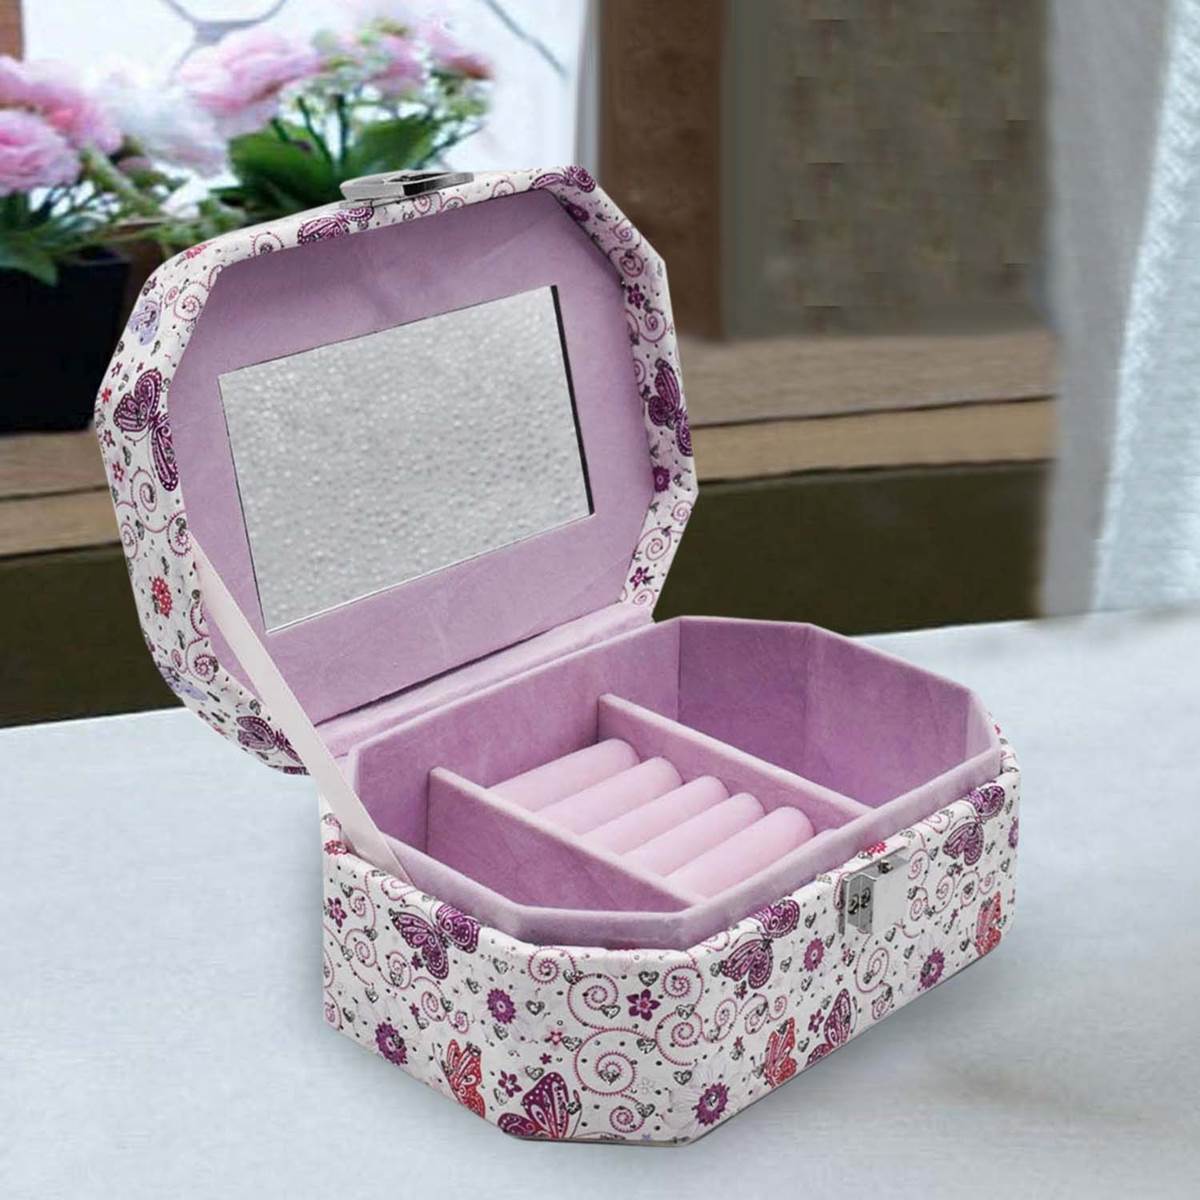 Jewellery Organizer Box with Mirror, 6 Section storage, PU Leather (123-10)